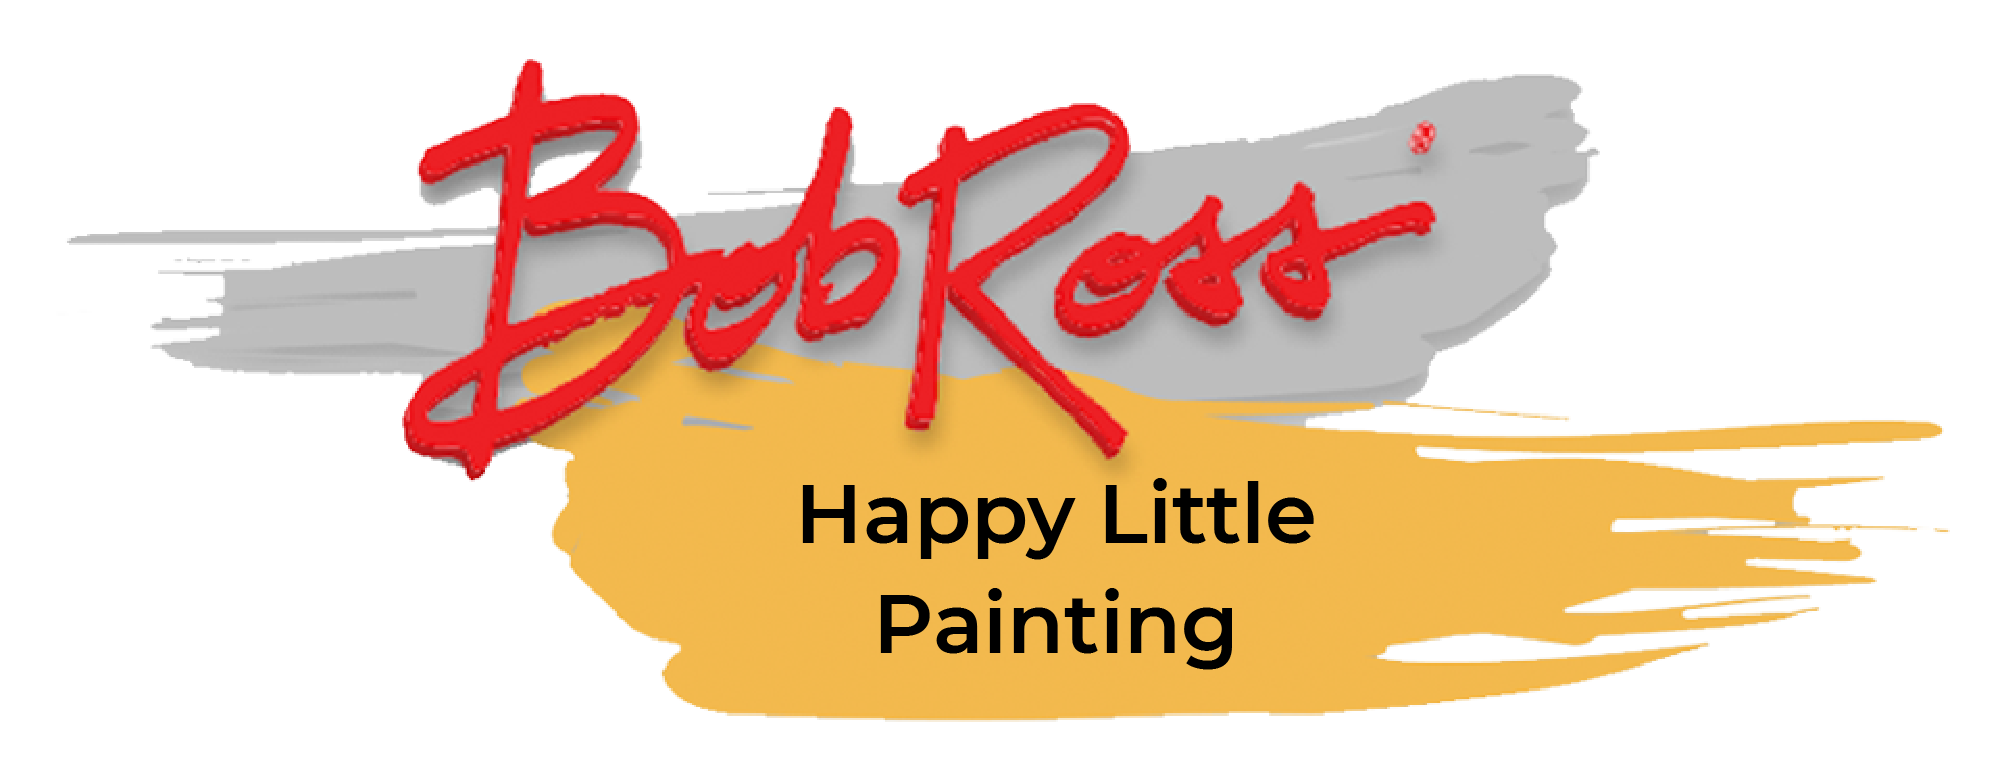 Bob Ross Painting Builder Logo